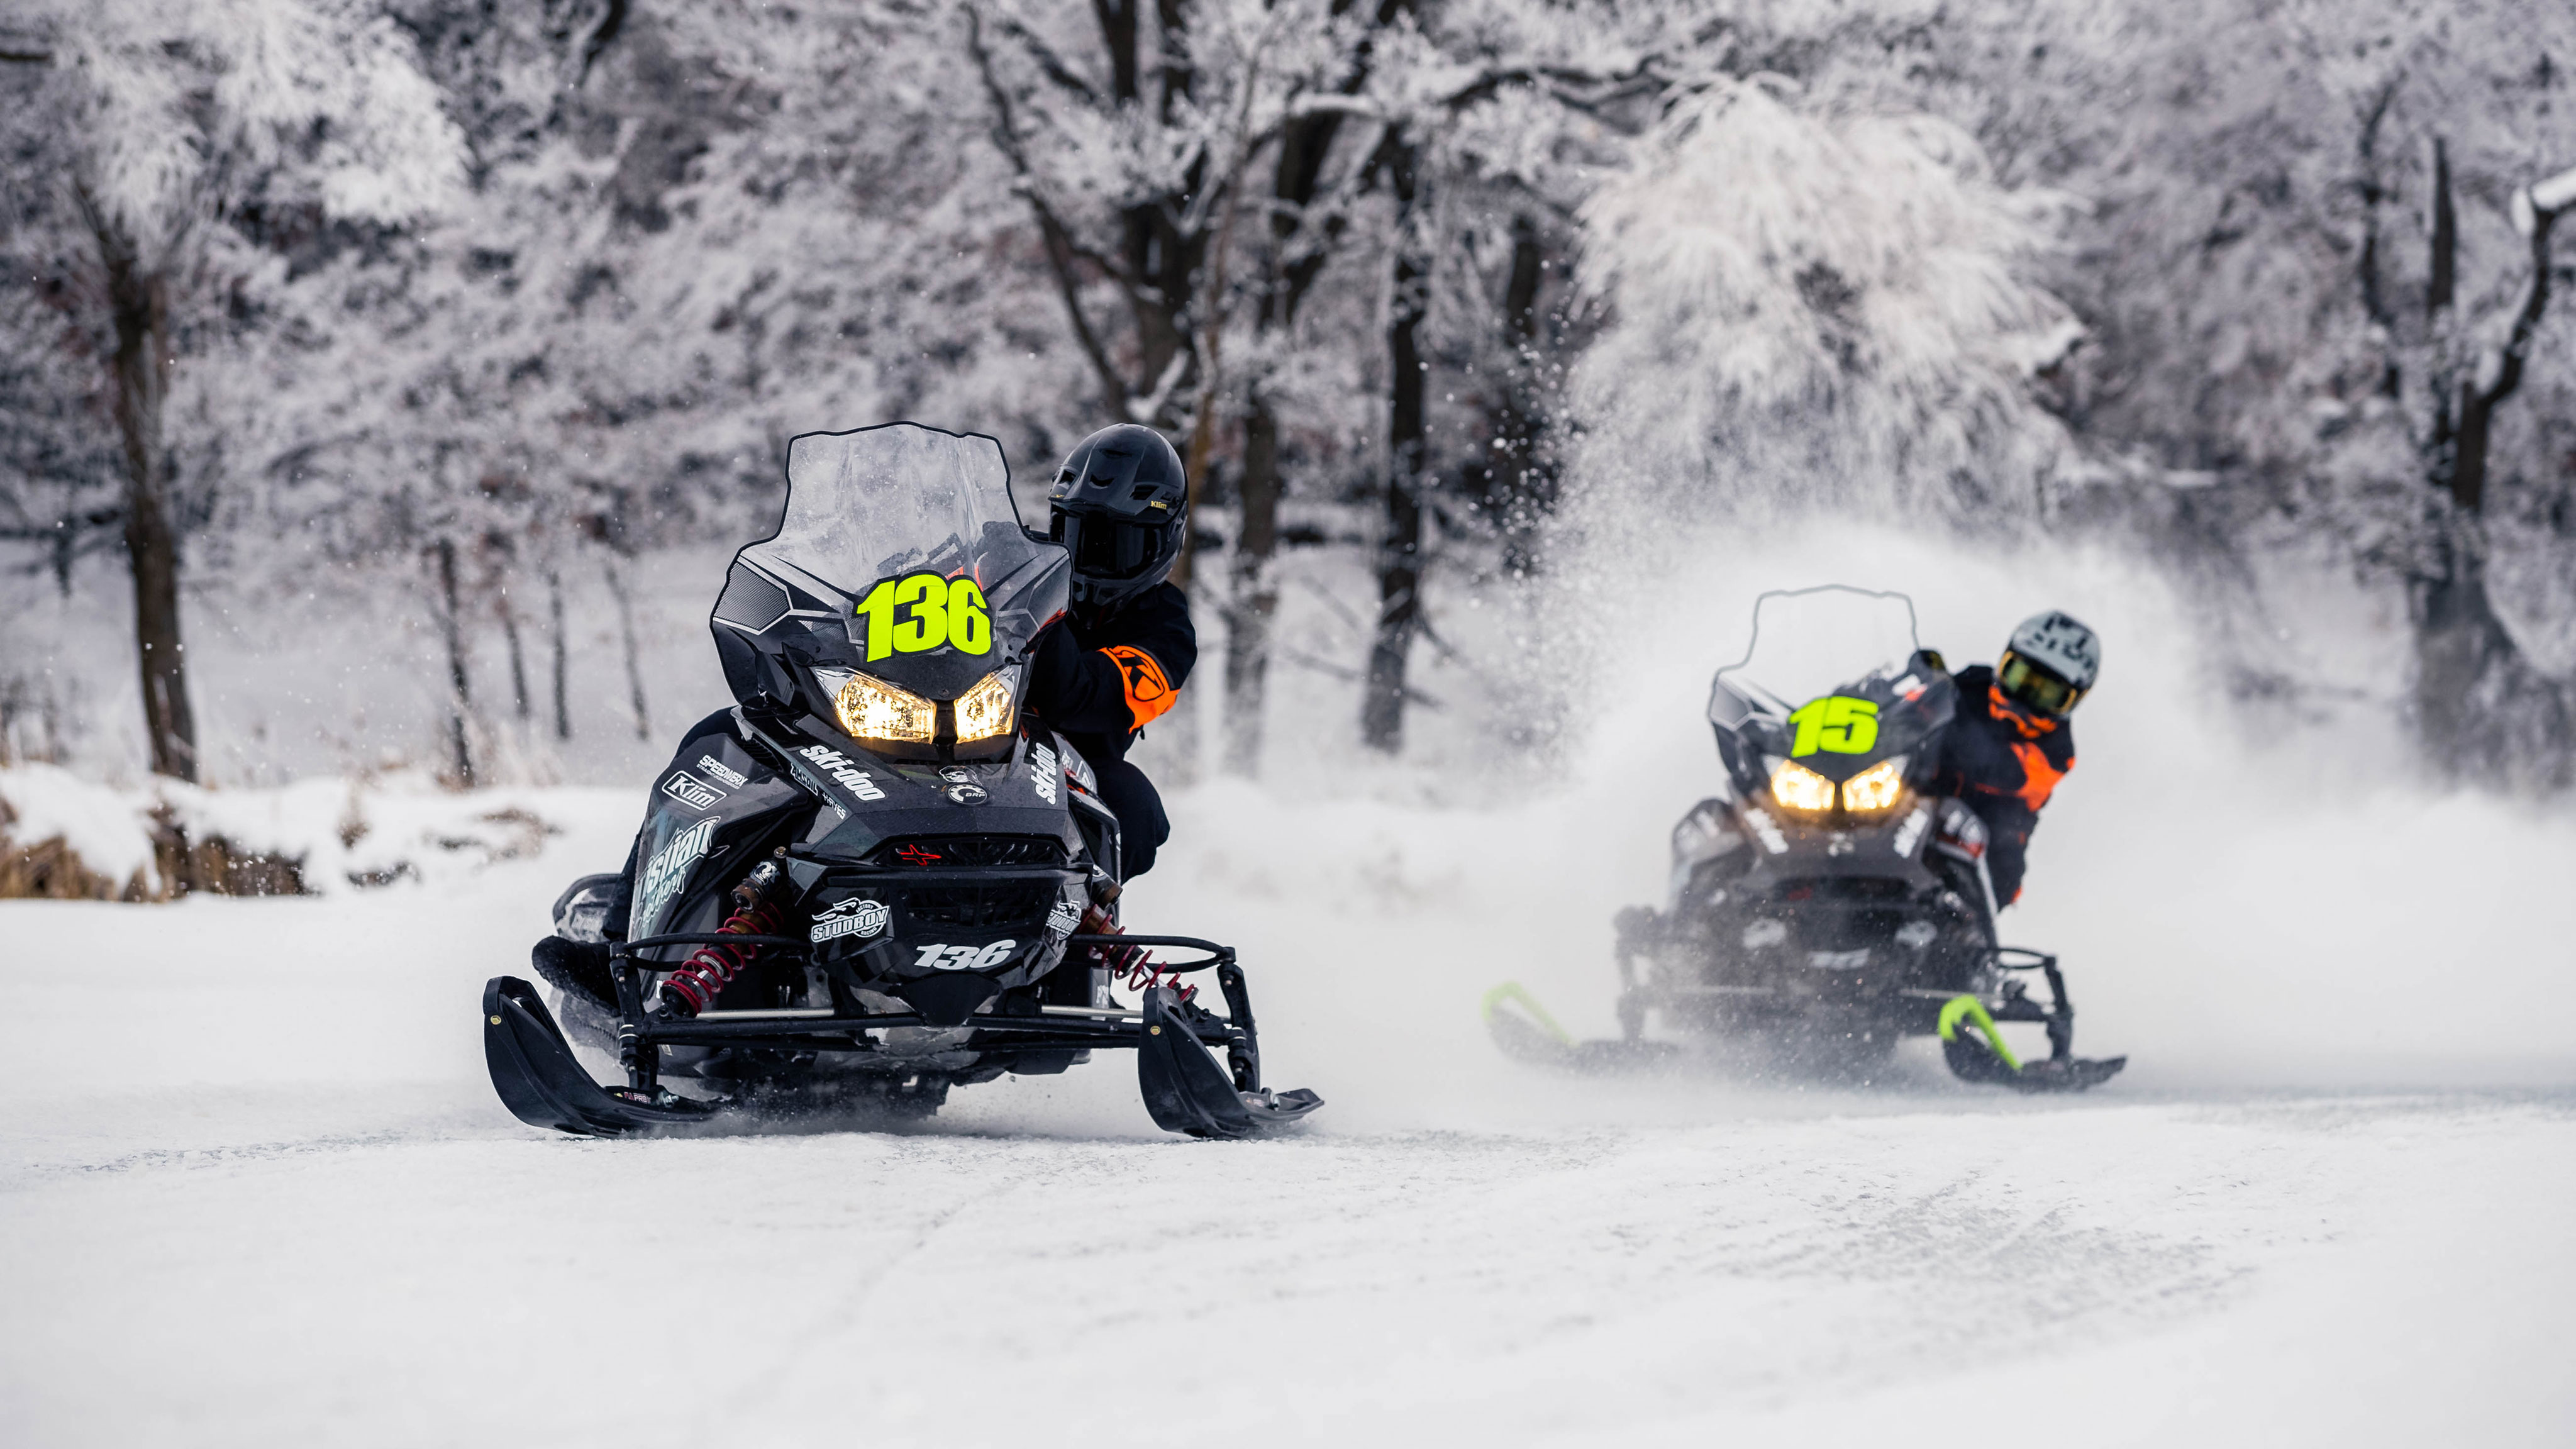 Two Ski-Doo riders on a snowmobile race